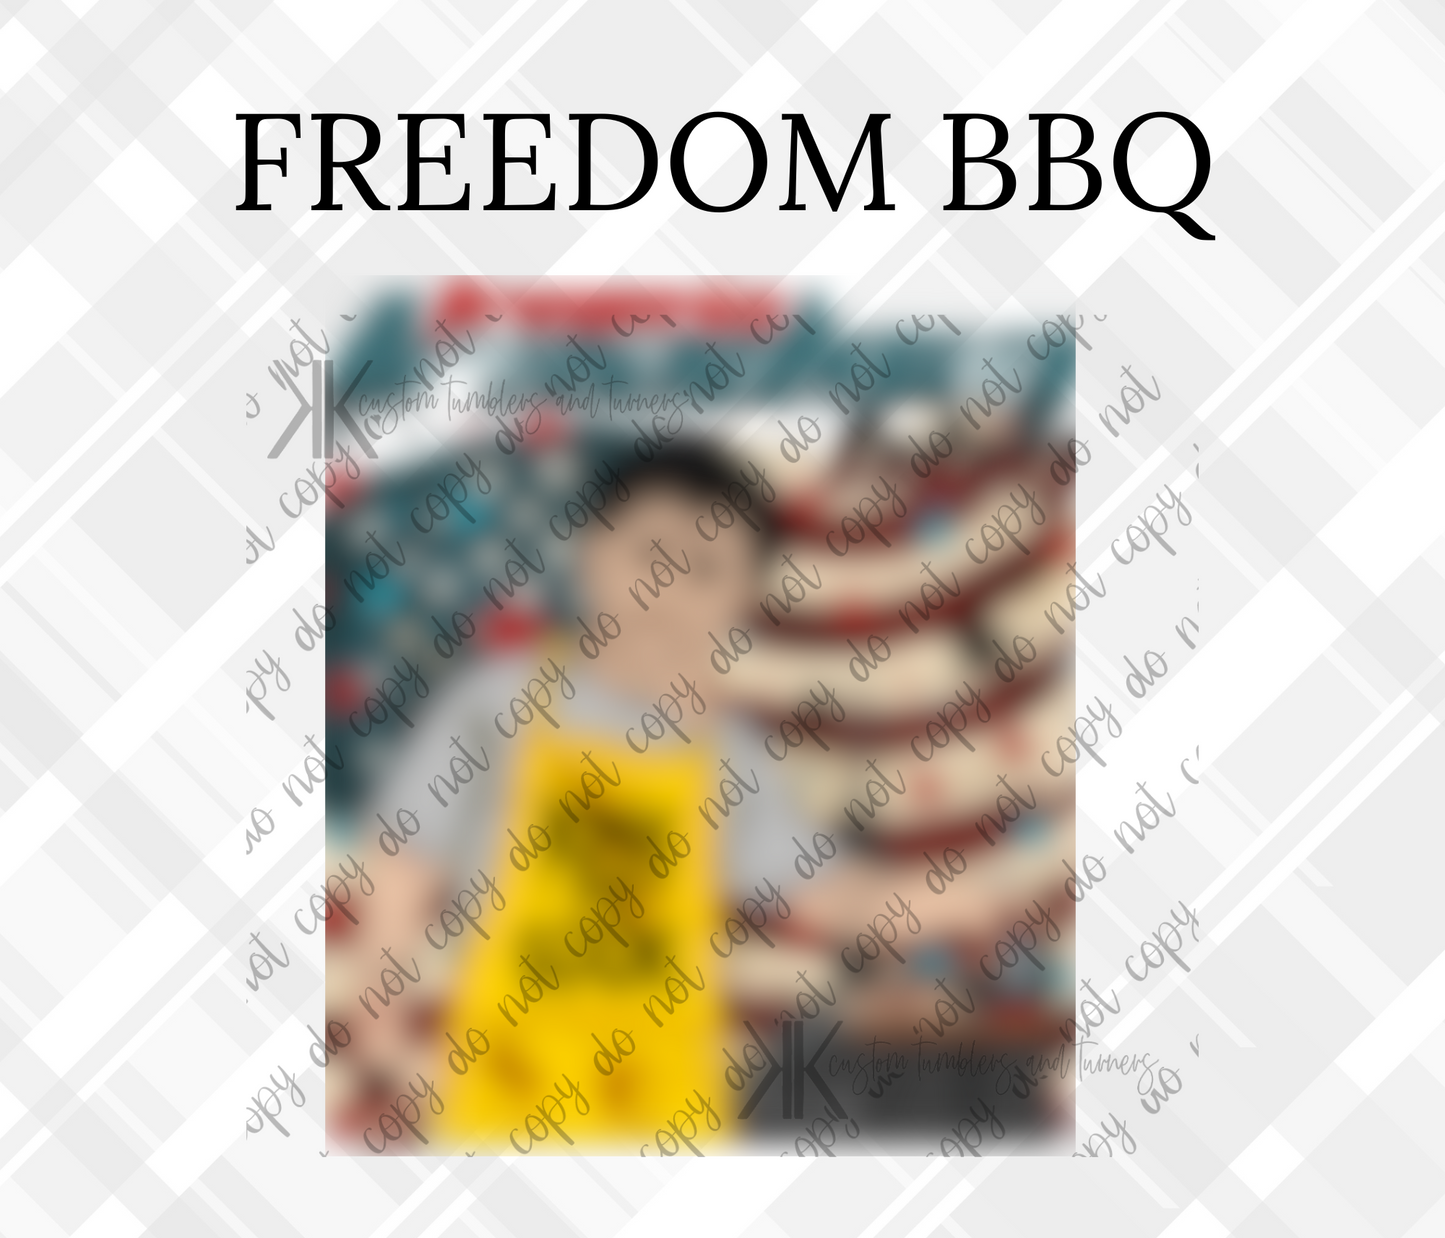 FREEDOM BBQ